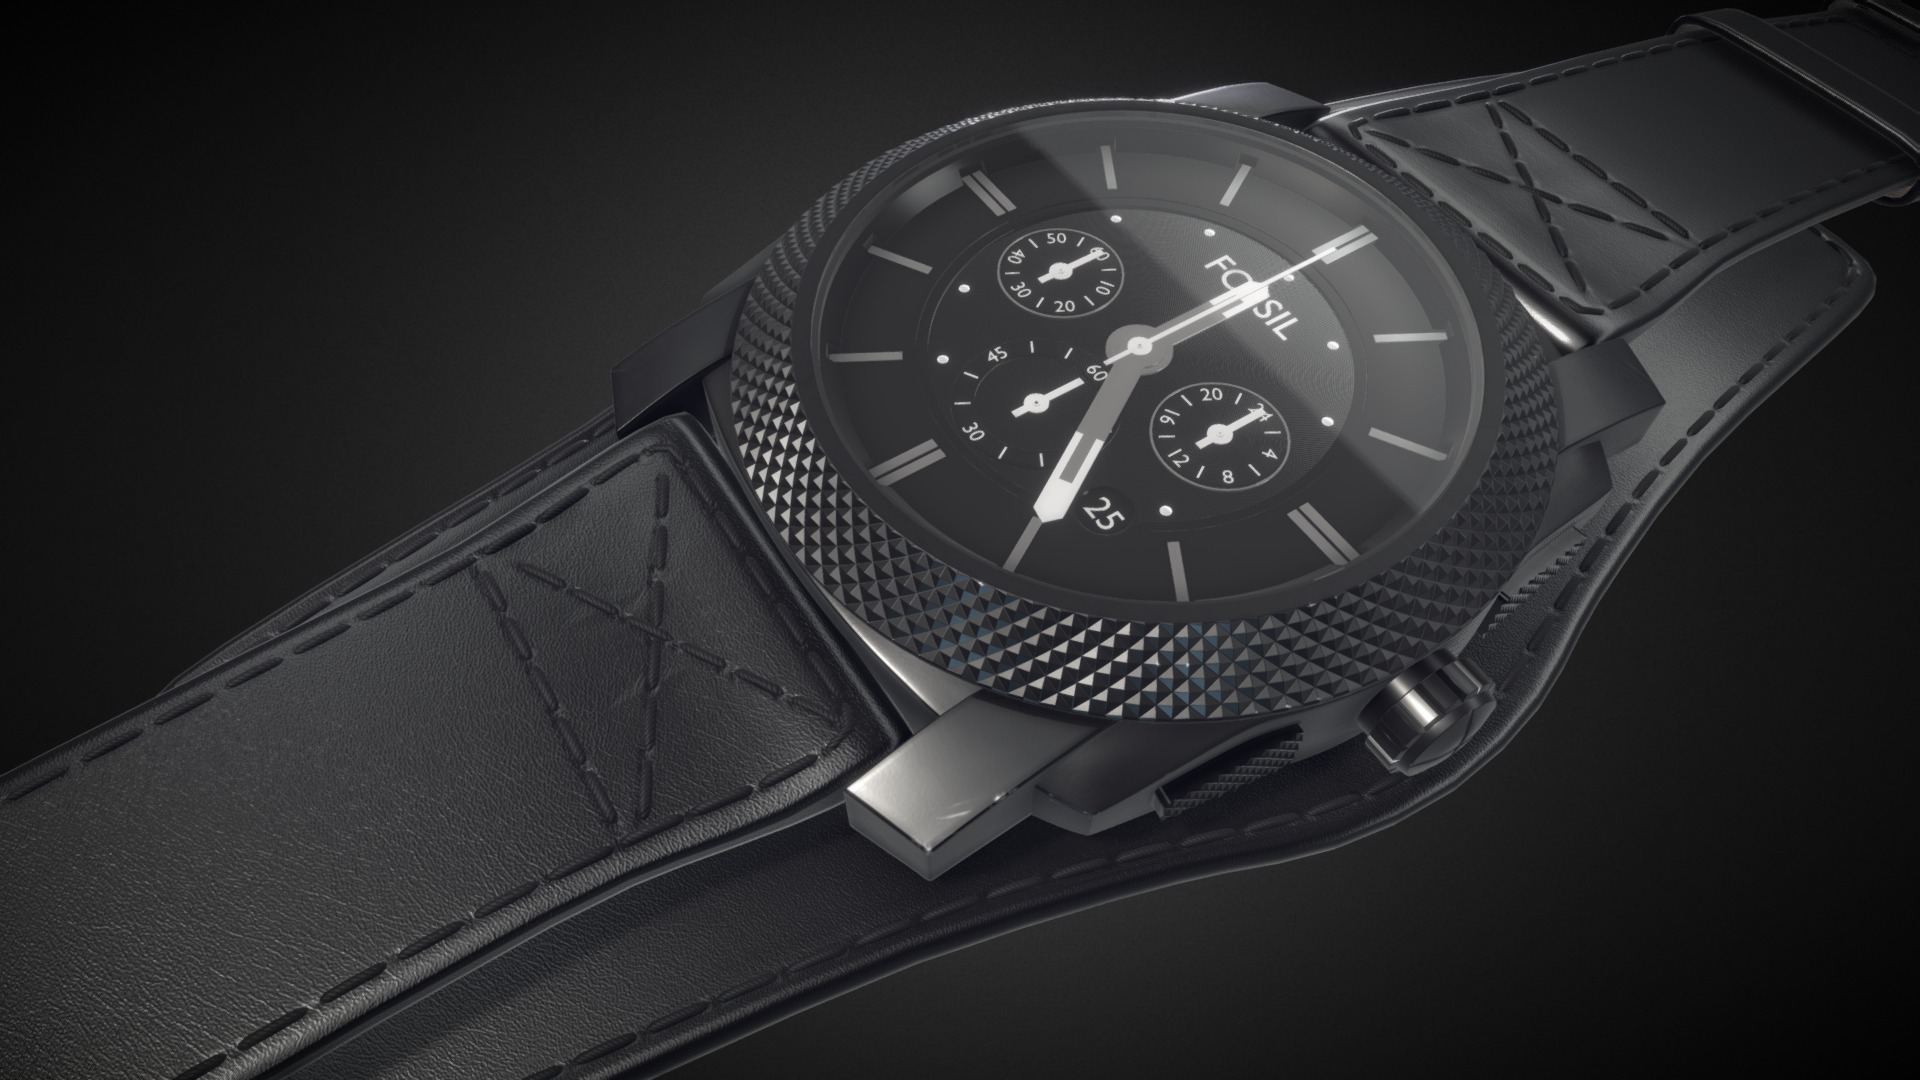 Animated model of Fossil wrist watch. Modelled using Blender 3d model